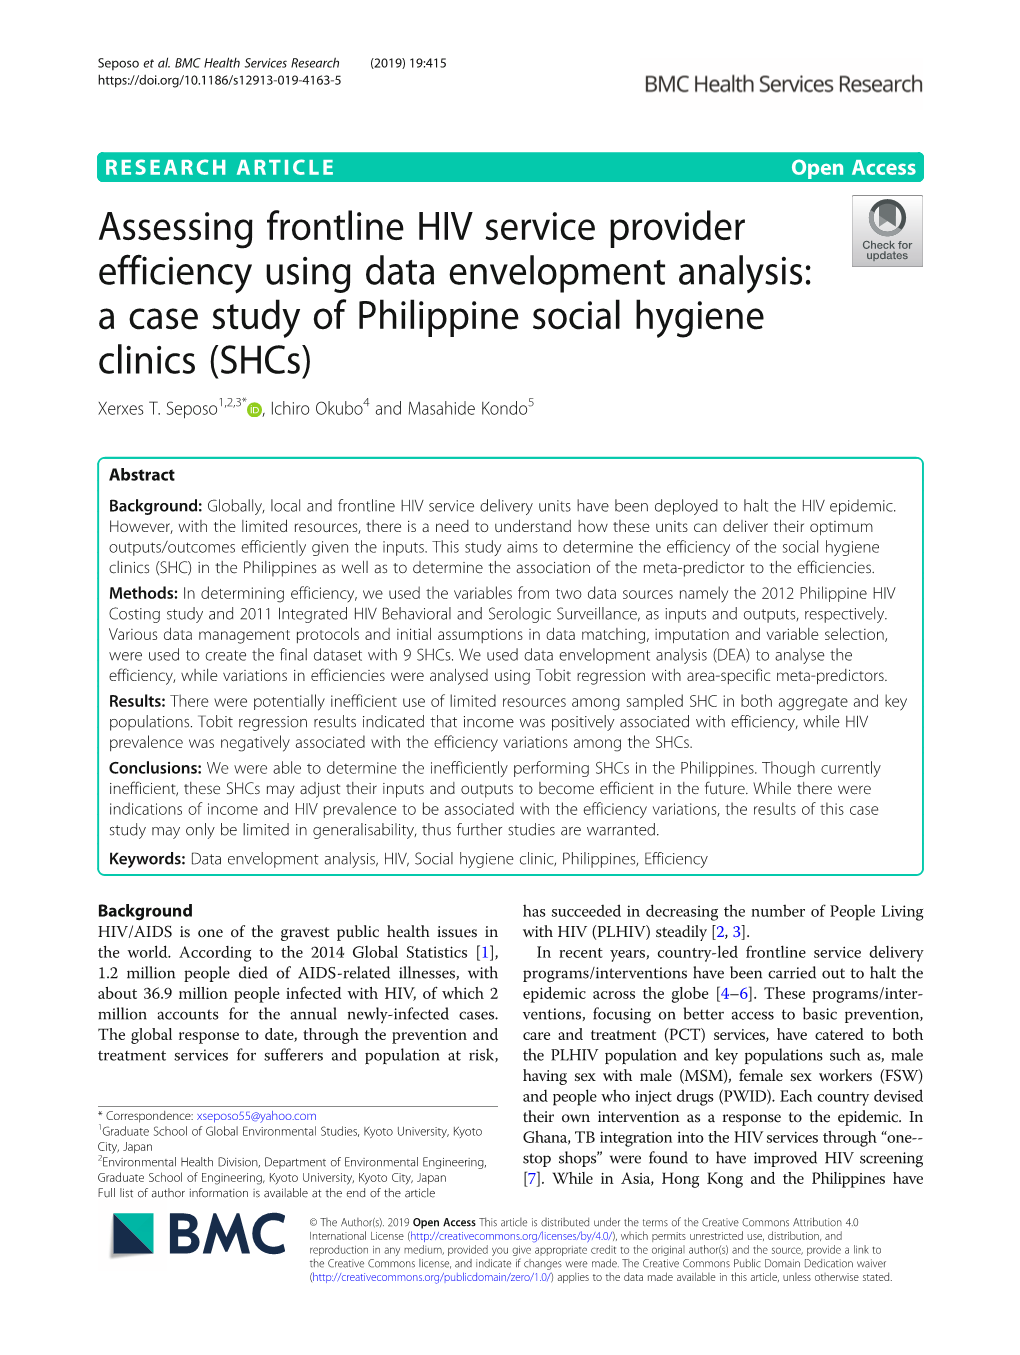 Assessing Frontline HIV Service Provider Efficiency Using Data Envelopment Analysis: a Case Study of Philippine Social Hygiene Clinics (Shcs) Xerxes T